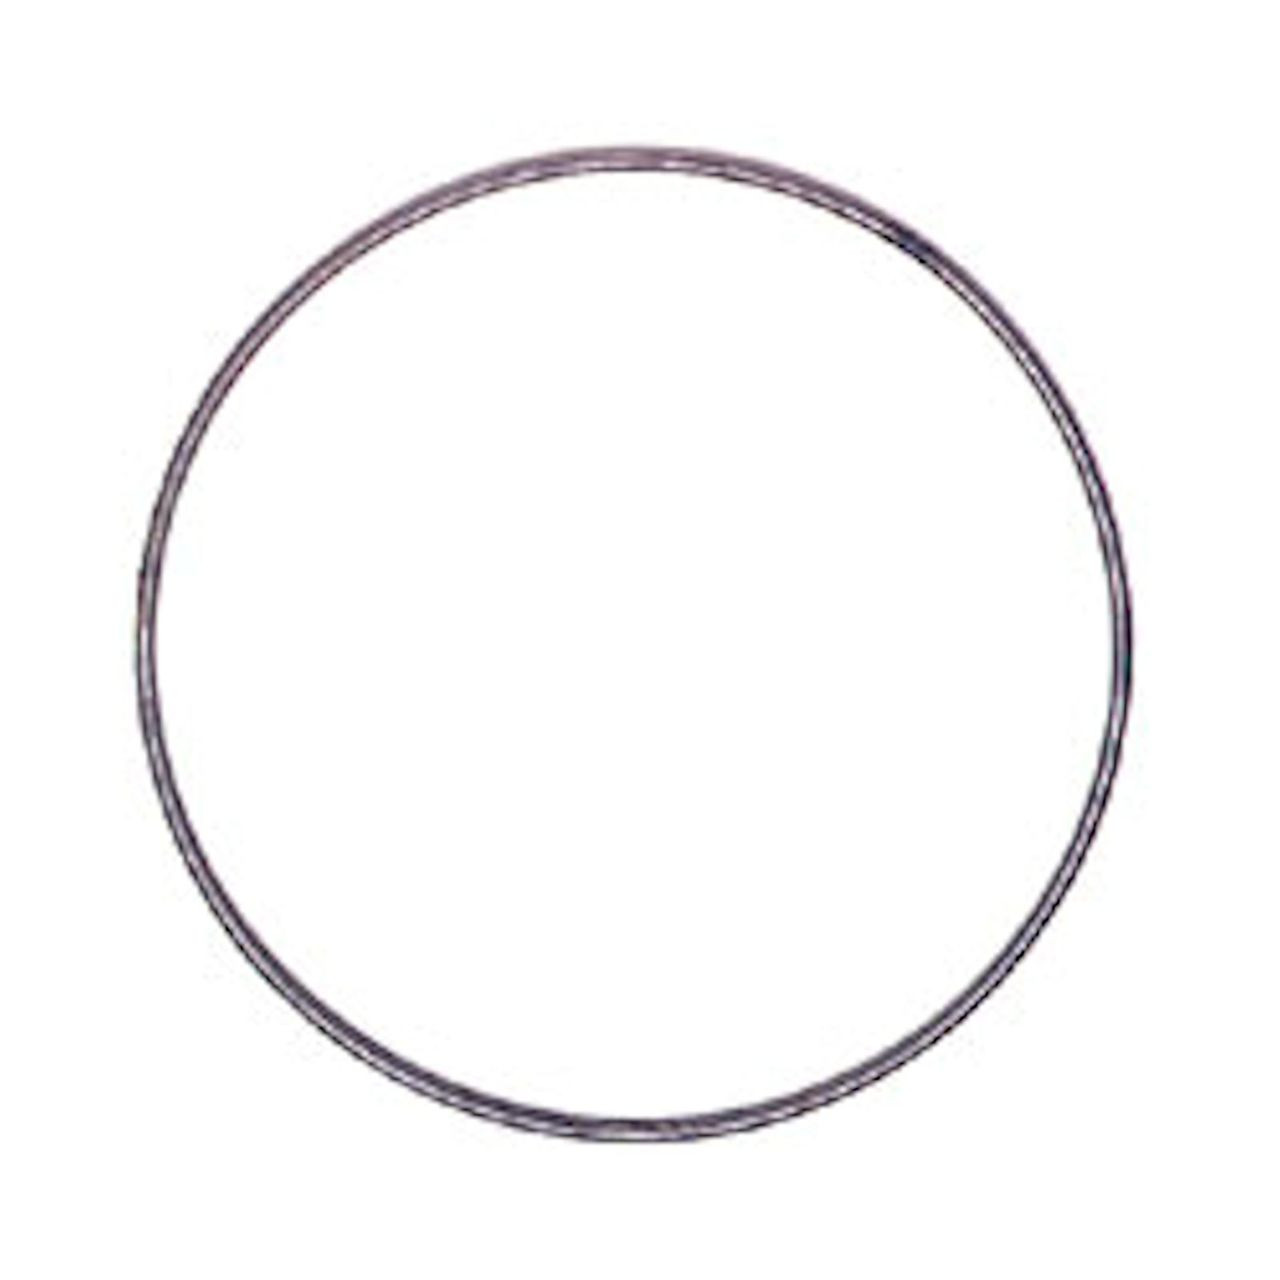 Metal Hoop Ring For Crafts 5" 3602-05